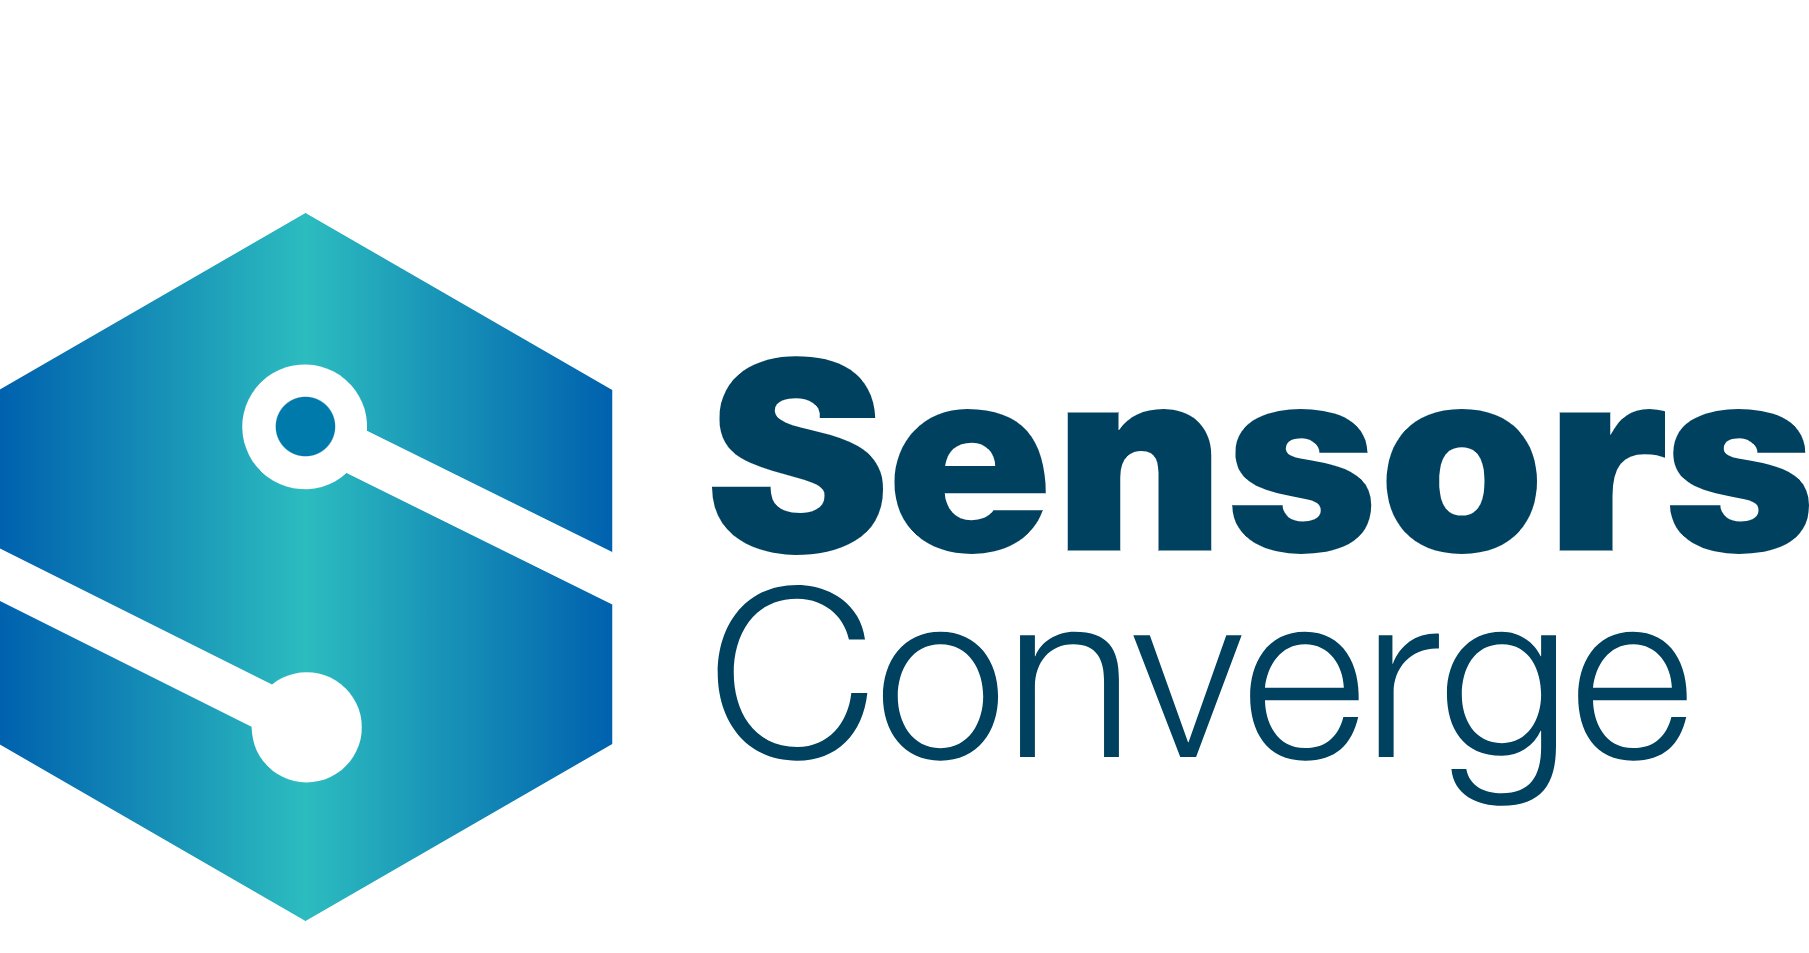 Sensors Converge Logo